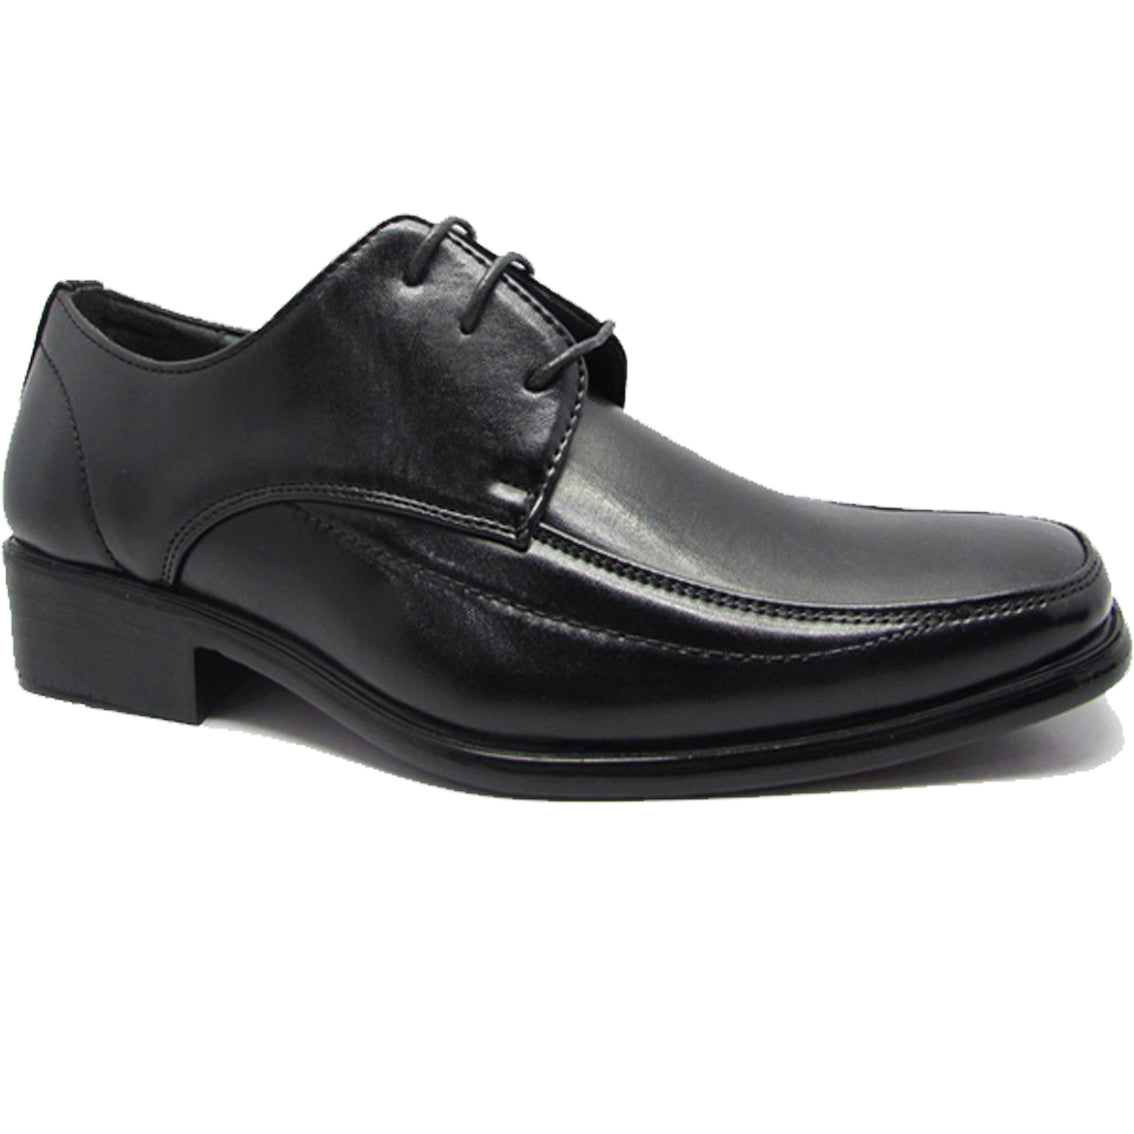 Wholesale Men's Shoes For Men Dress School Derby Channing NFHD